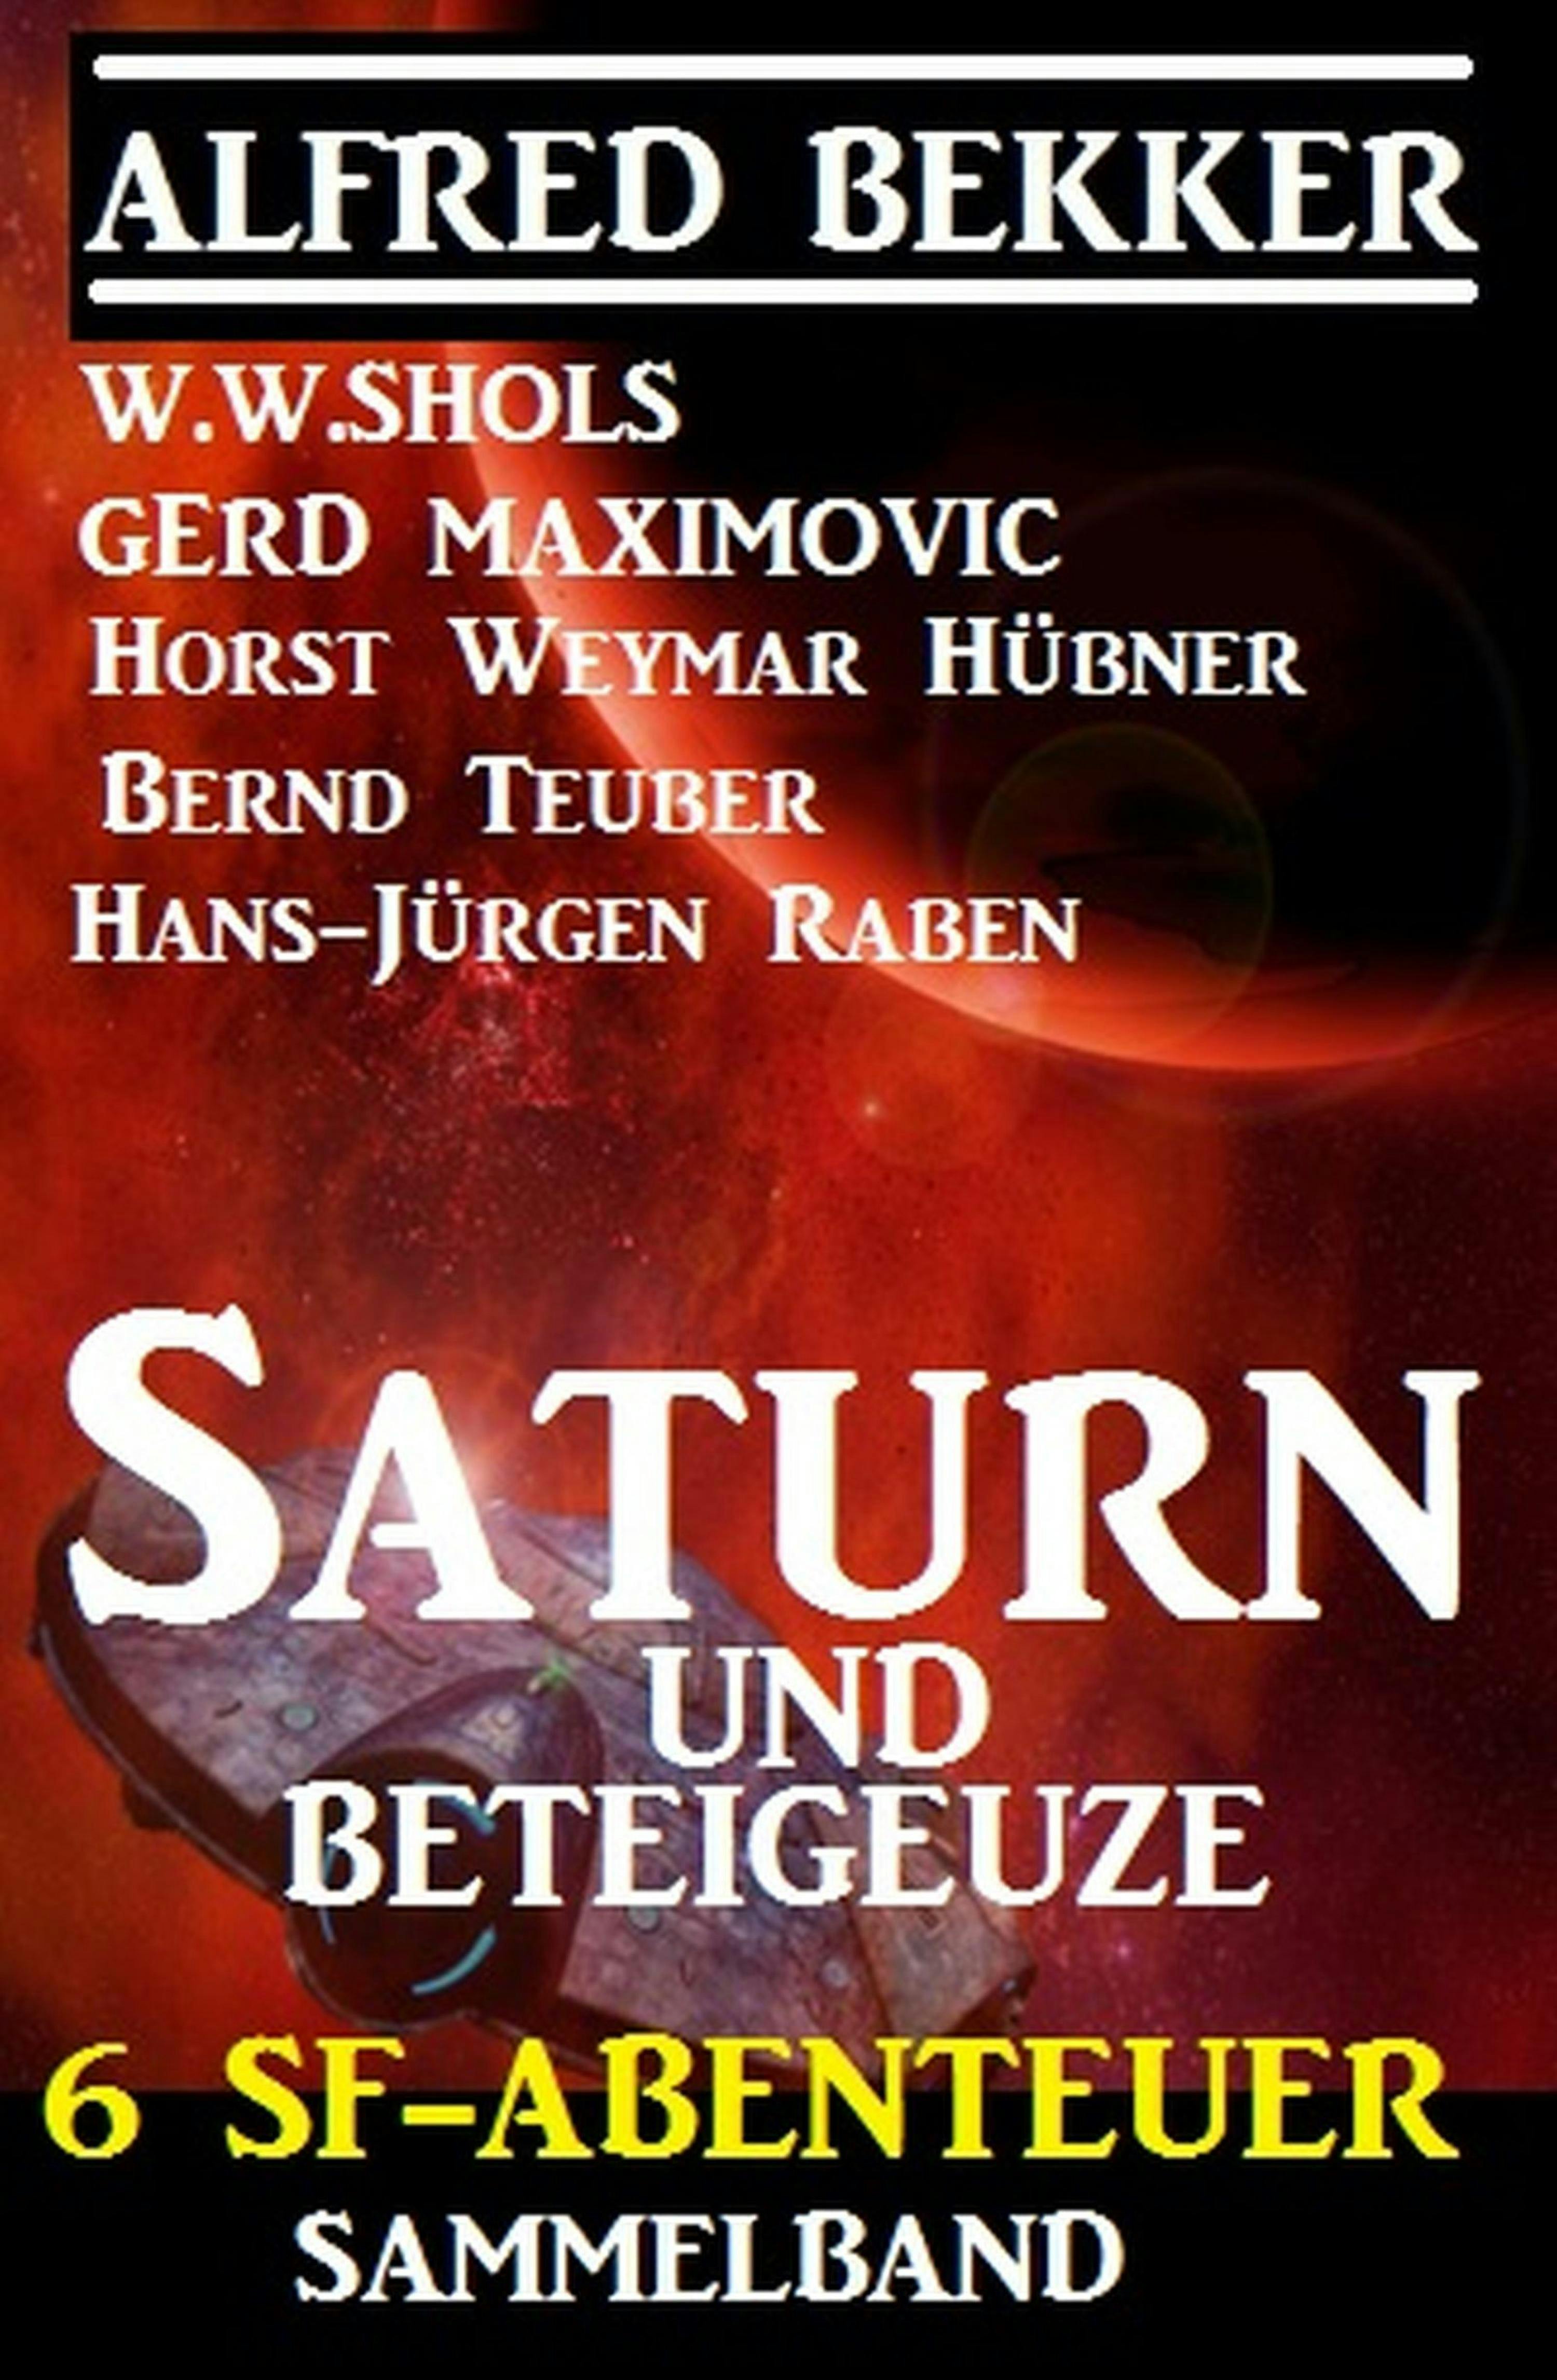 Sammelband 6 SF-Abenteuer: Saturn und Beteigeuze - Gerd Maximovic, Alfred Bekker, Horst Weymar Hübner, W. W. Shols, Bernd Teuber, Hans-Jürgen Raben